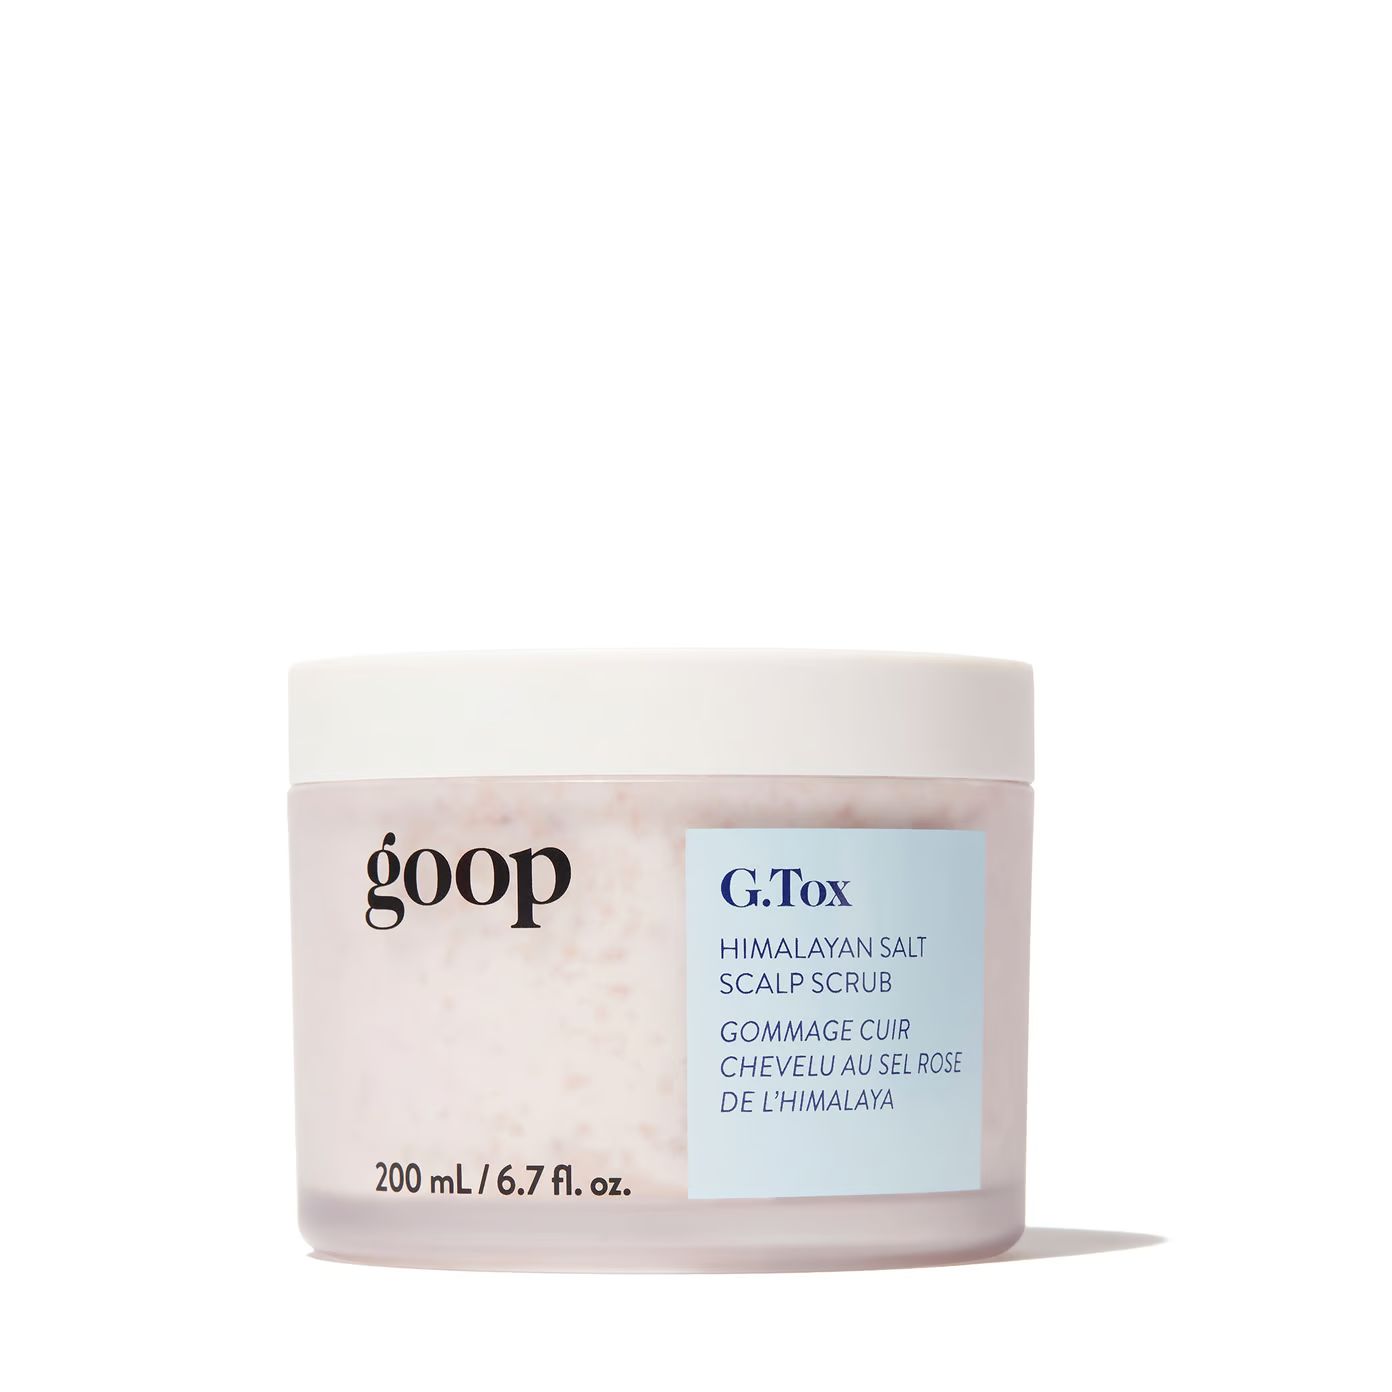 G.Tox Himalayan Salt Scalp Scrub Exfoliating Shampoo | goop | goop